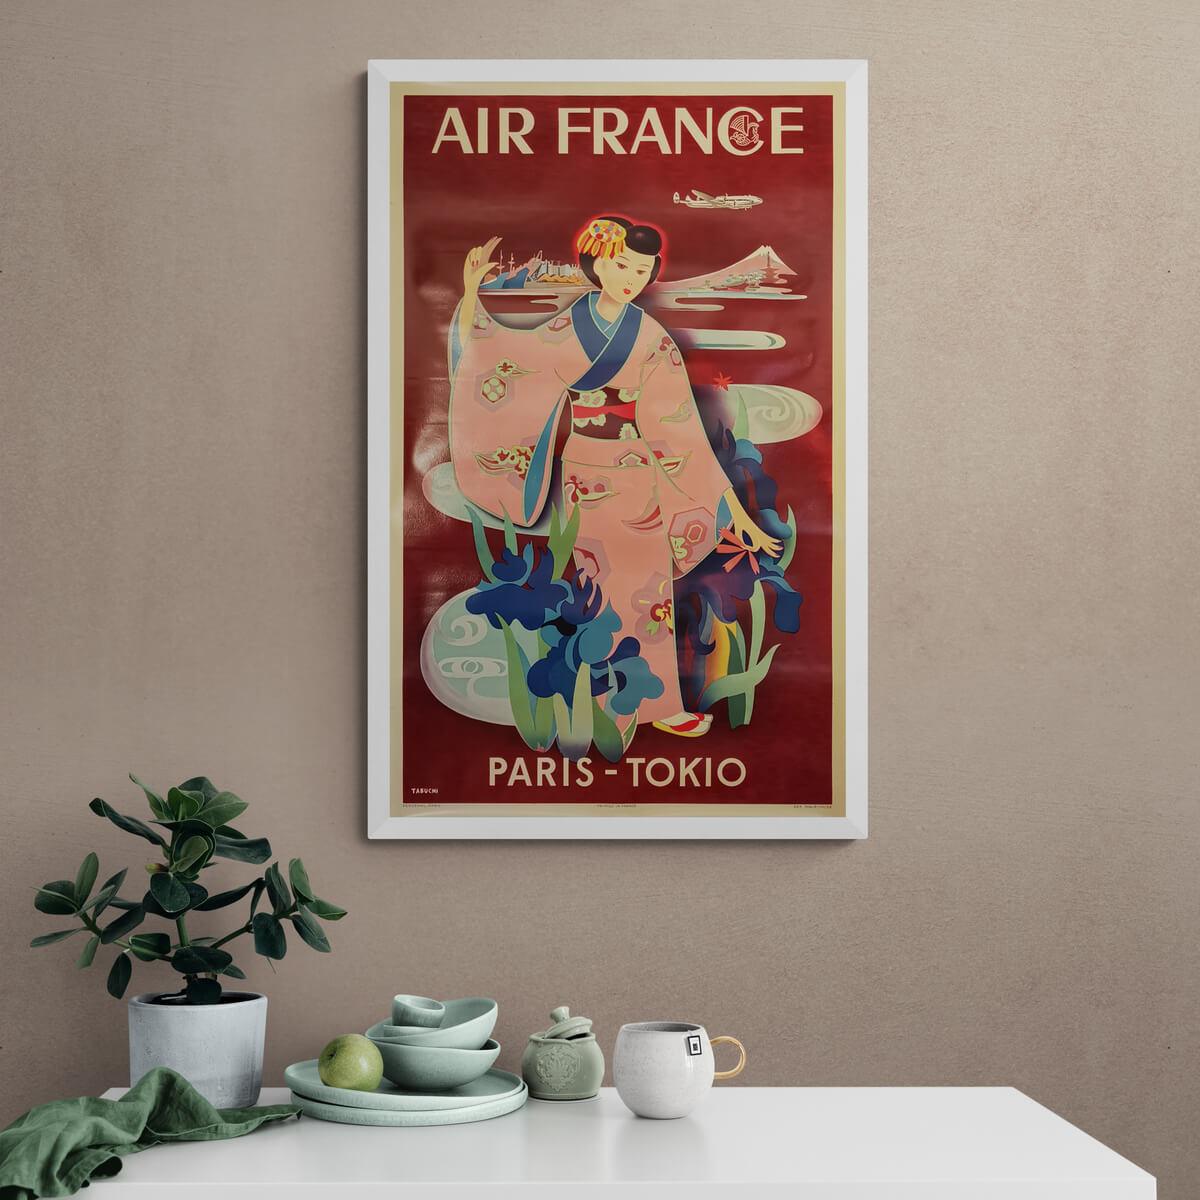 airfrance-paris-tokyo-original-vintage-poster